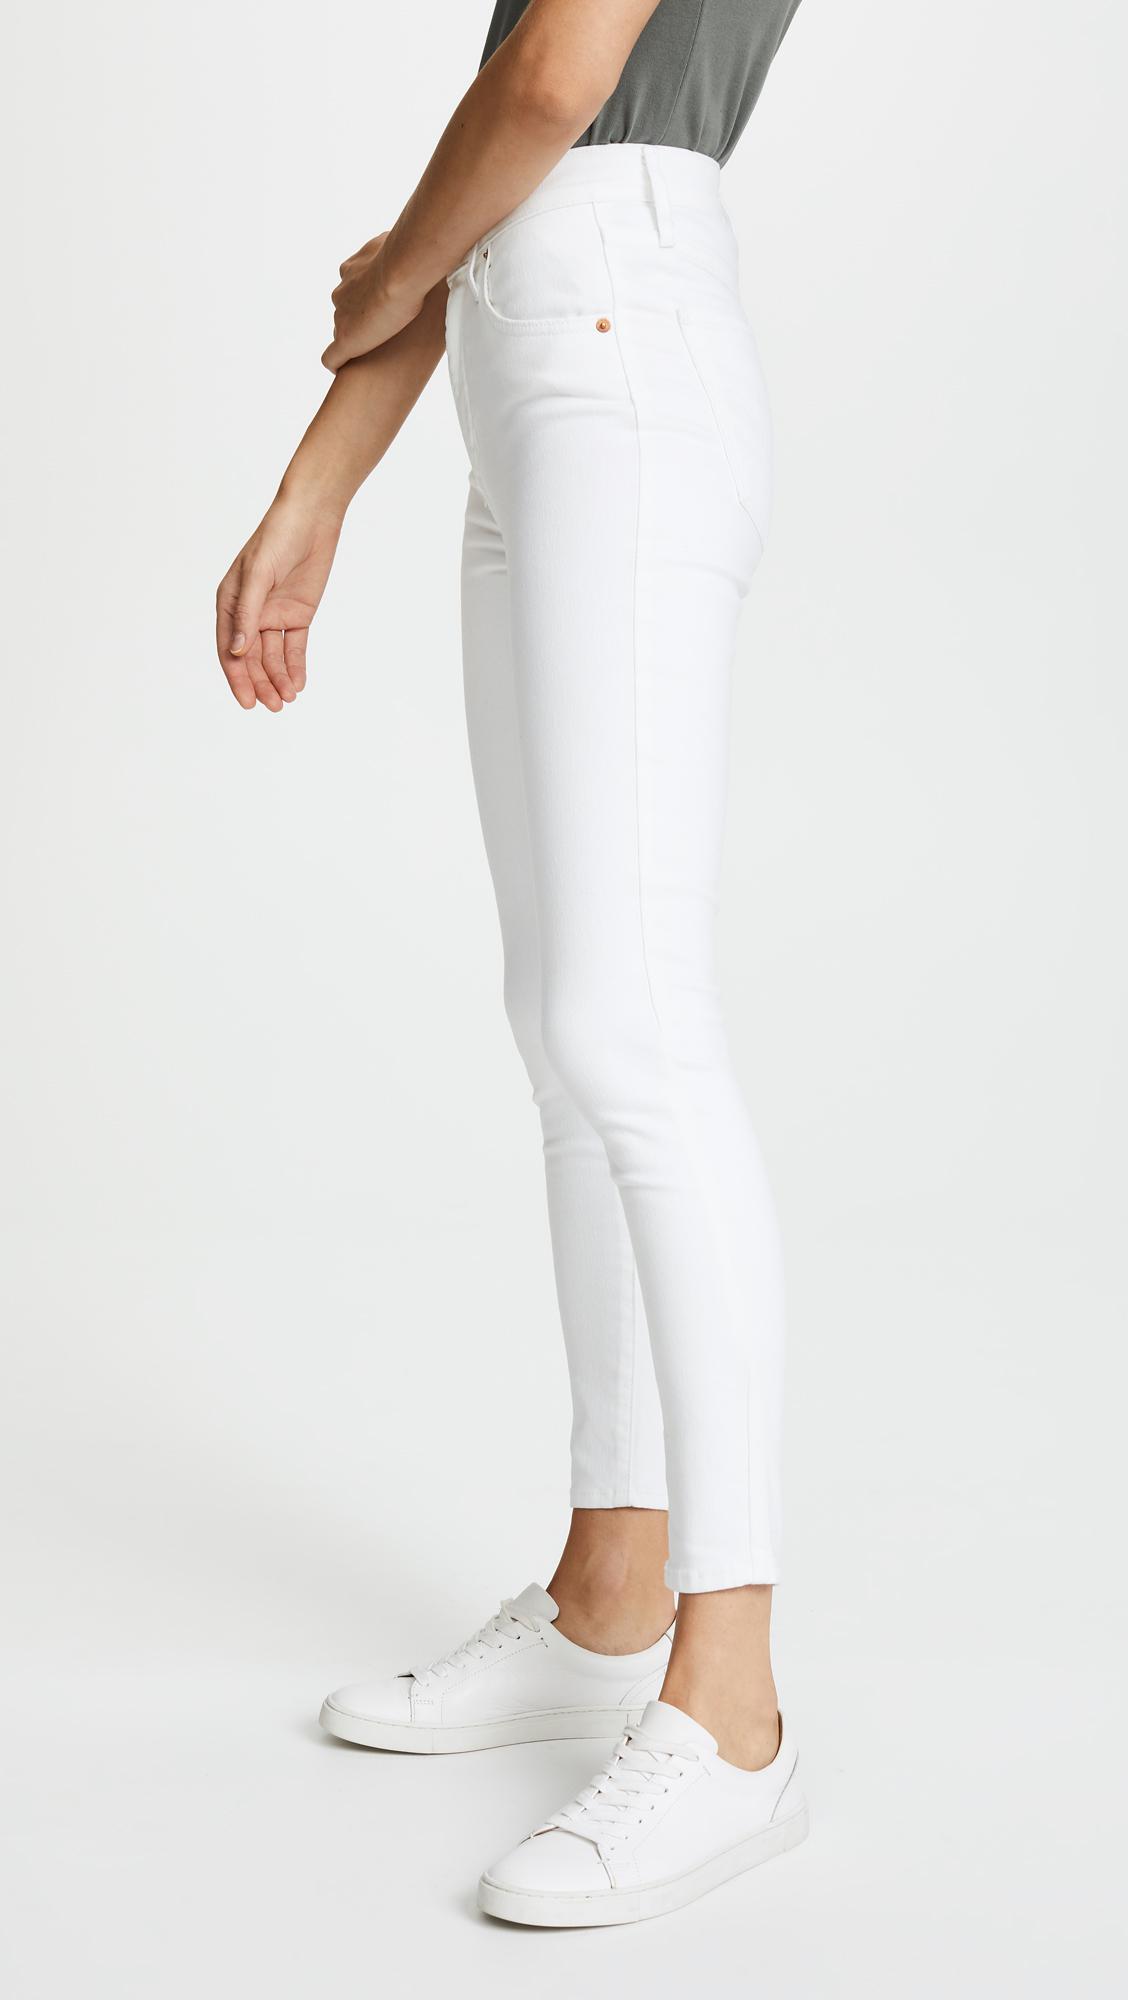 Levi's Denim Mile High Ankle Super Skinny Jeans in White - Lyst